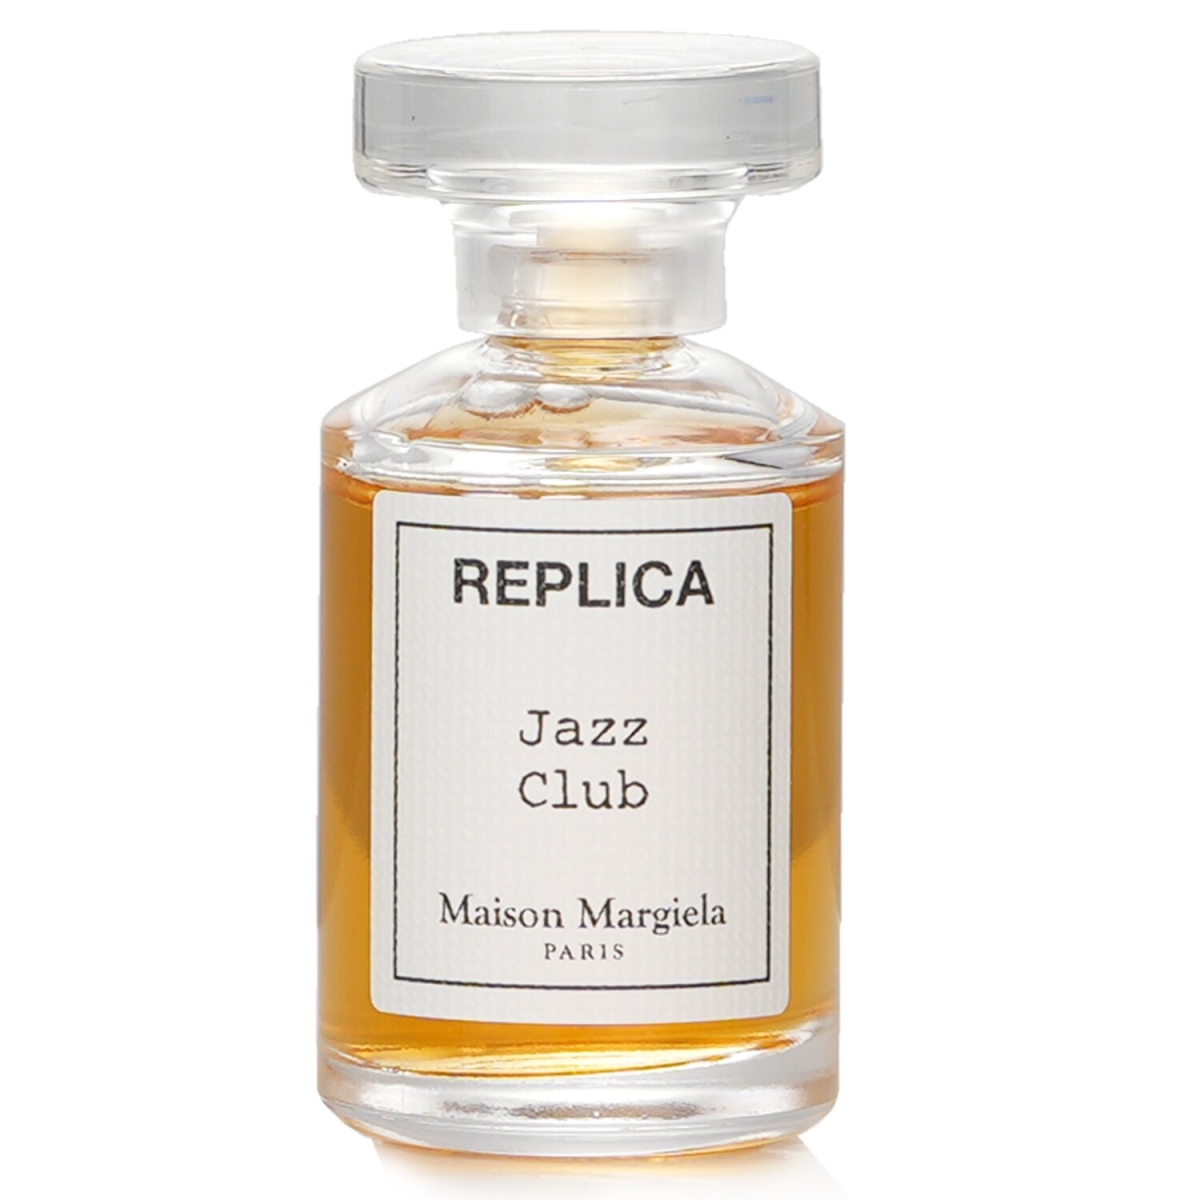 Maison Margiela 332562 7 ml Mens Replica Jazz Club Eau De Toilette Miniature Spray